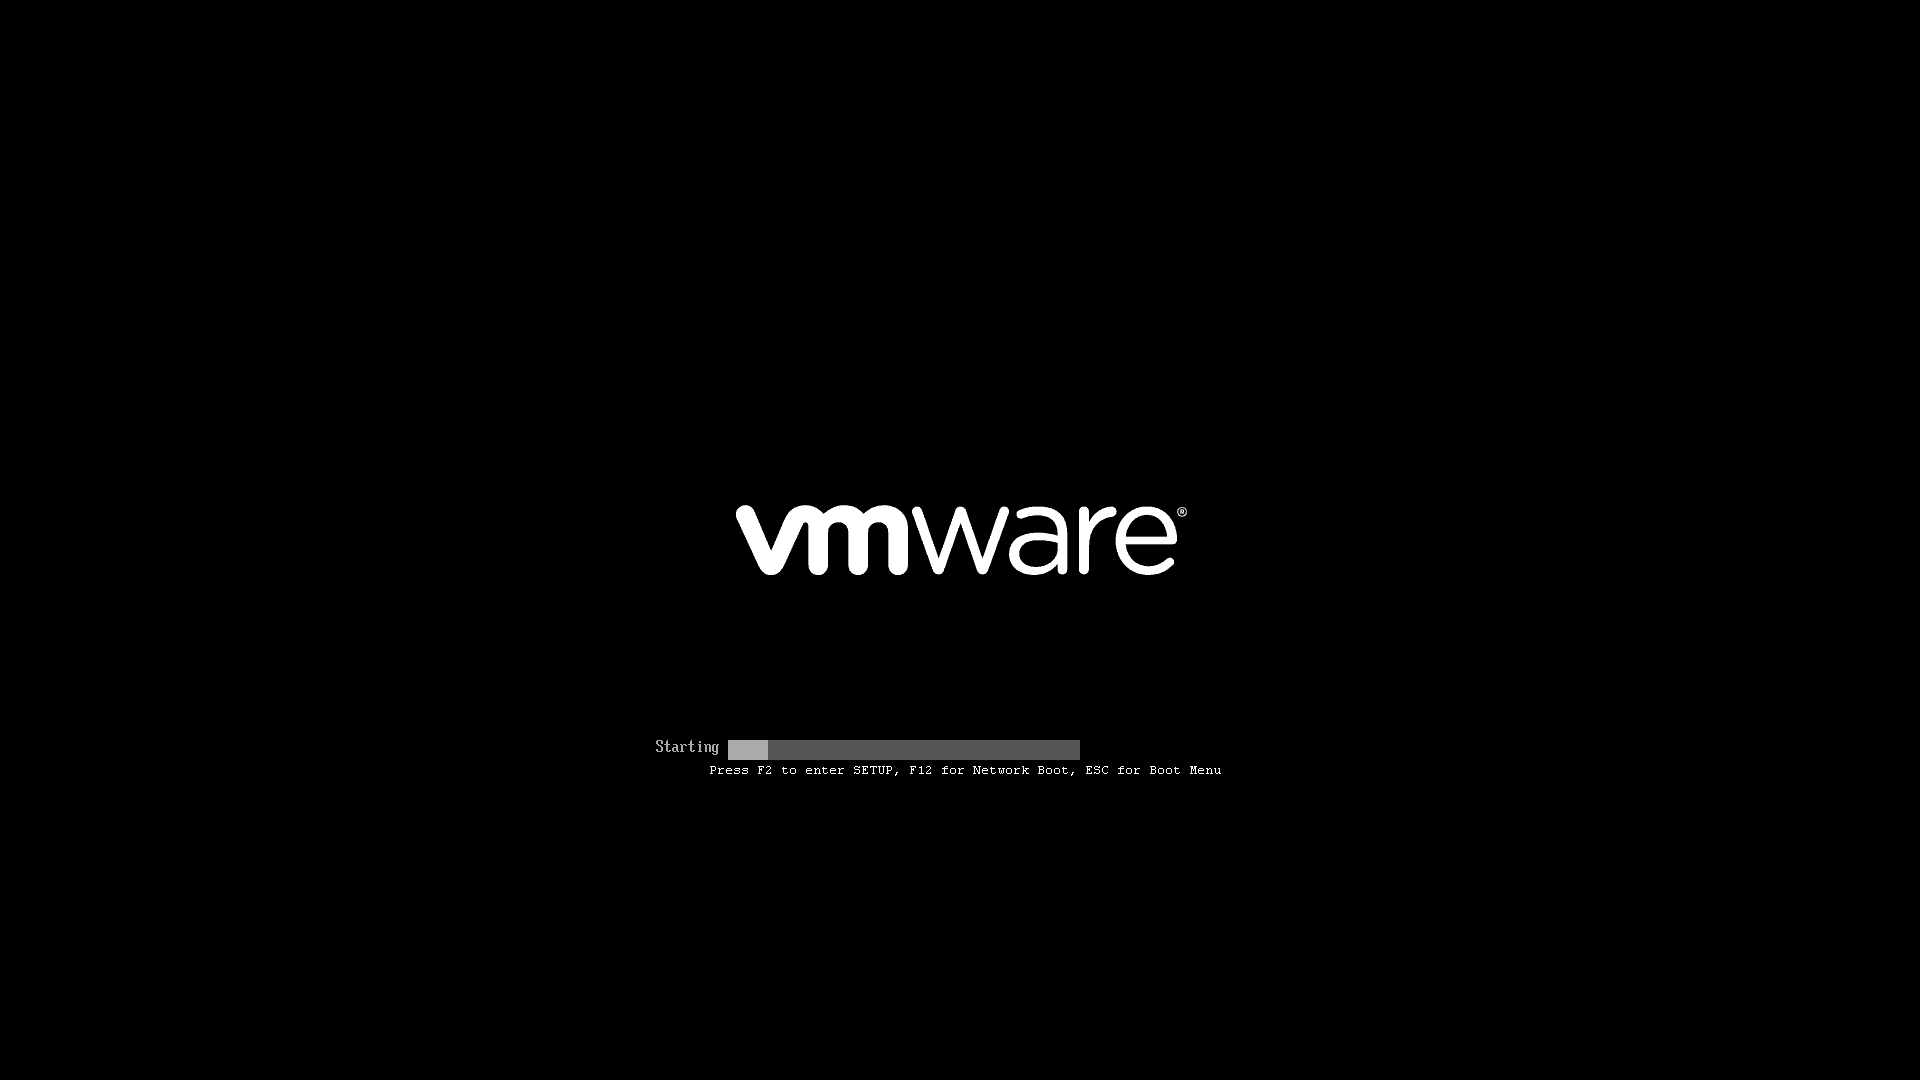 vmware workstation start vm on boot windows 10